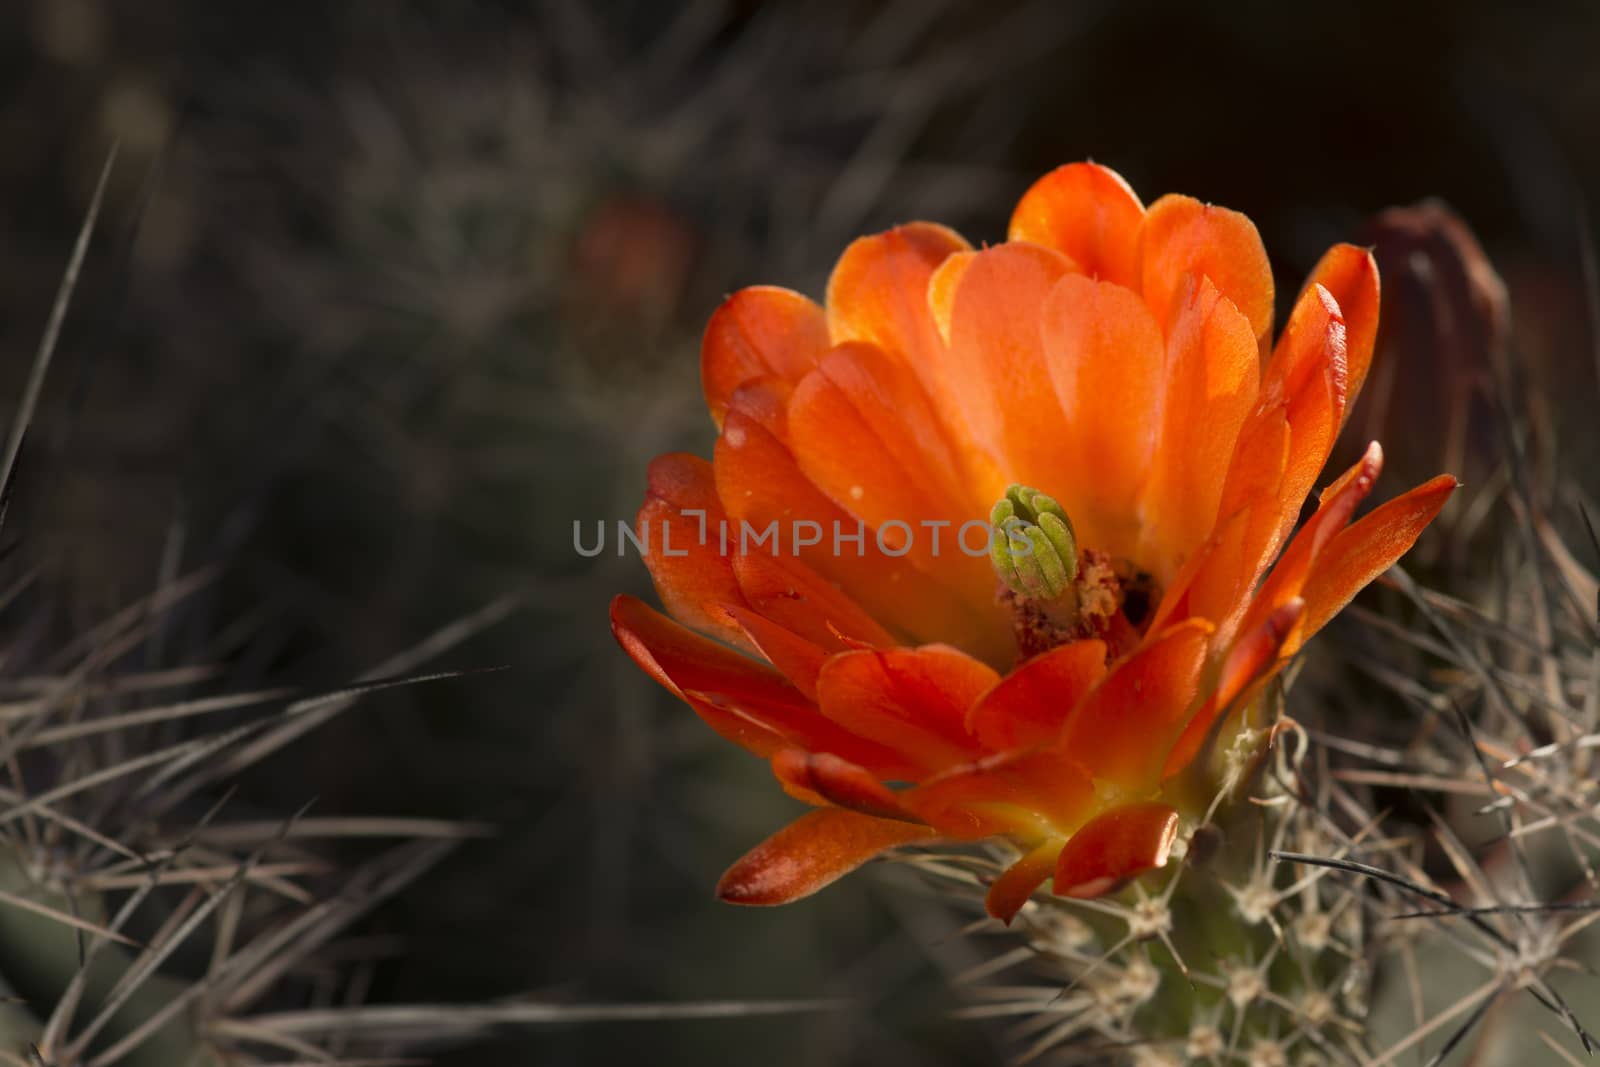 Desert bloom - beautiful red flower barrel cactus by Paulmatthewphoto